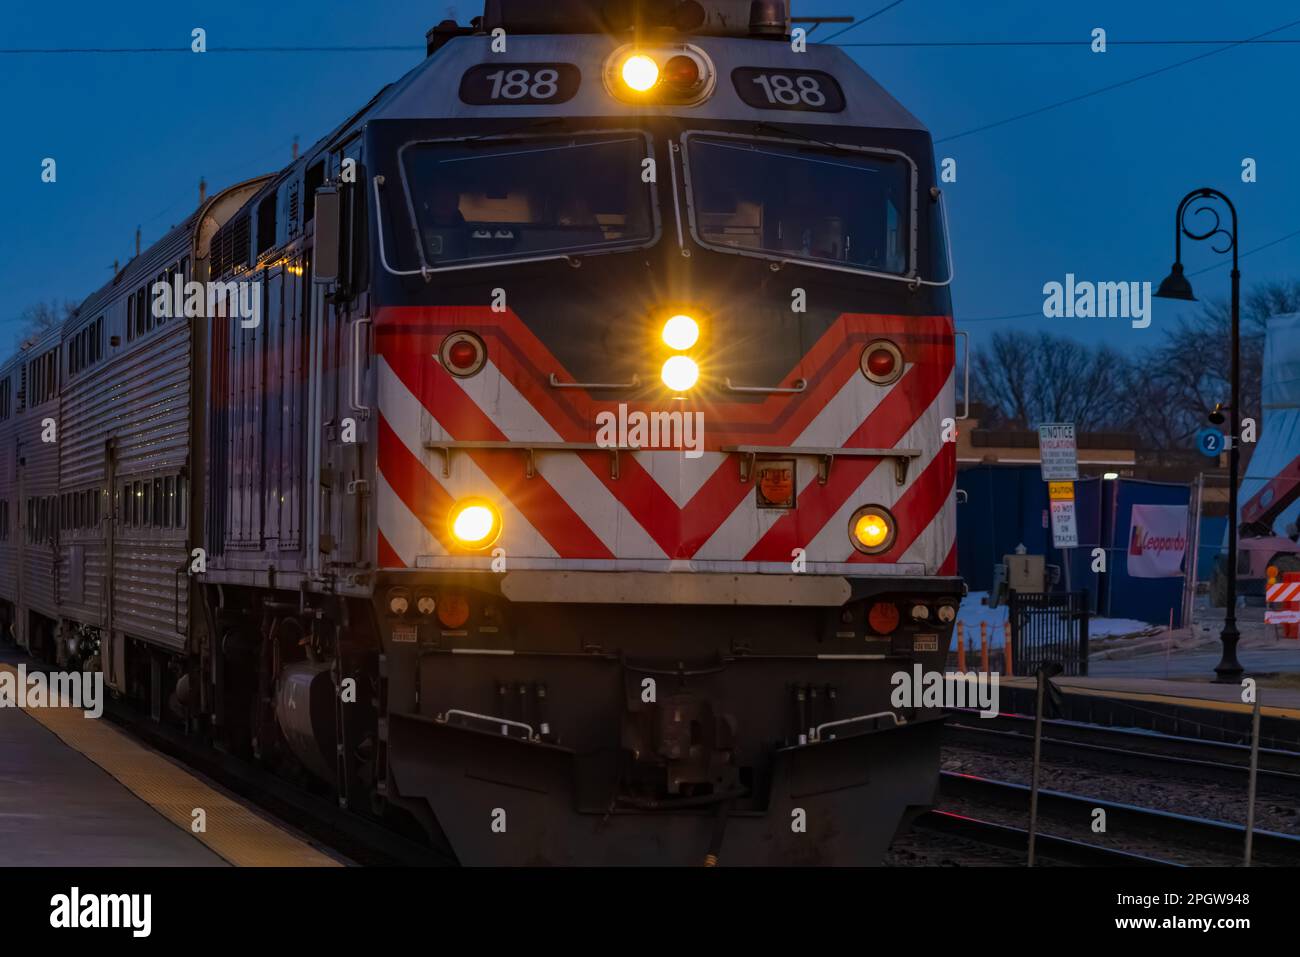 Metra Commuter Train Locomotive in Chicago area Stock Photo